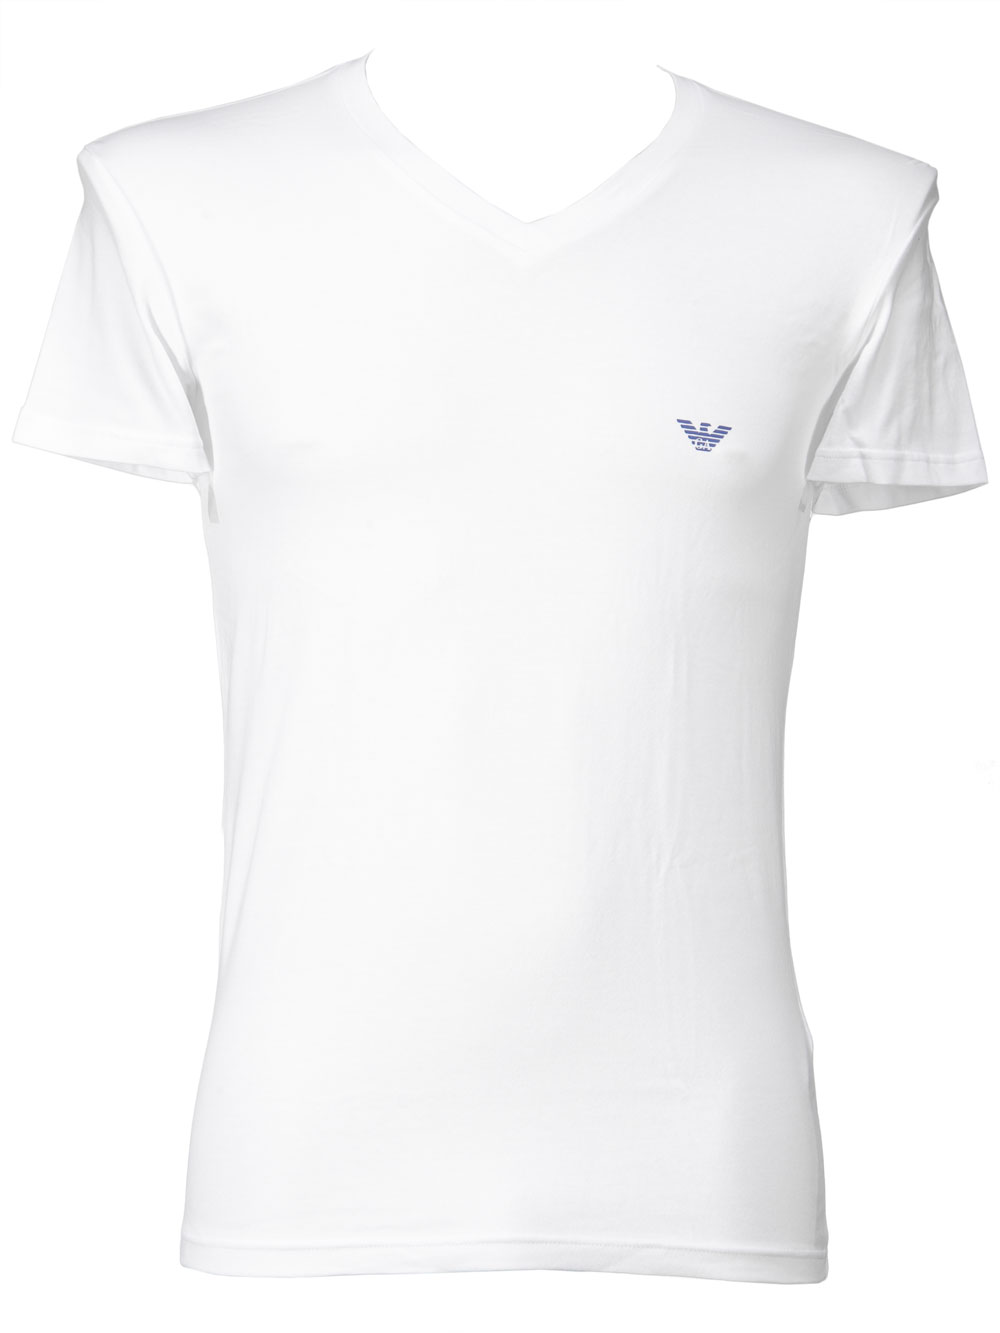 ARMANI T shirt Maglietta Emporio Armani Sweatshirt Cotone Uomo Bianco 1108107P745 10 